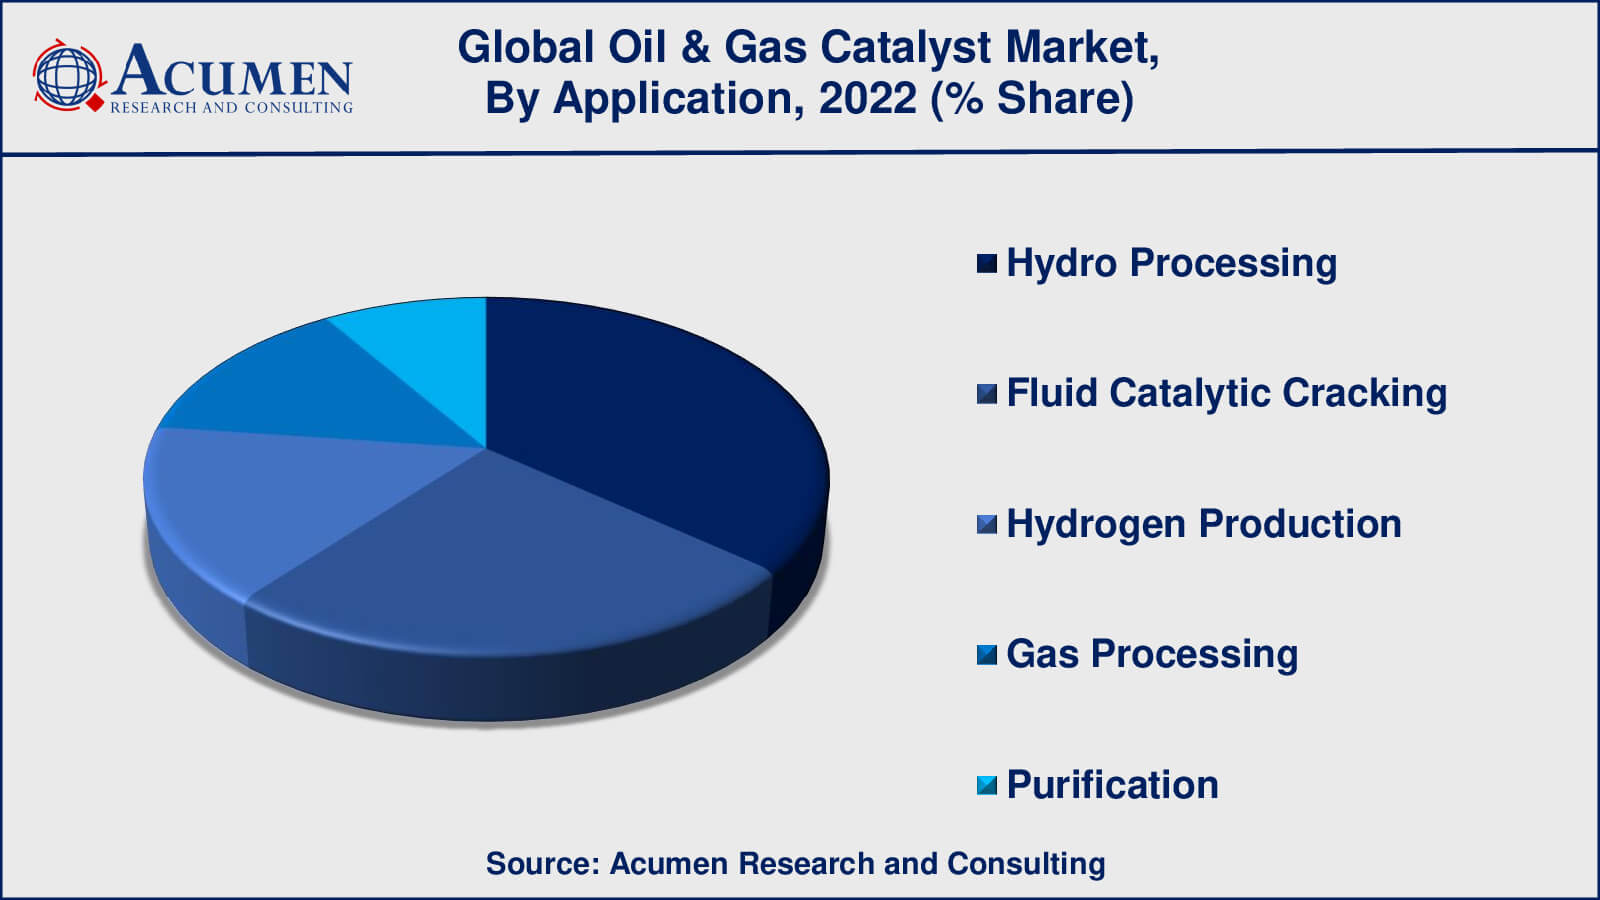 Oil & Gas Catalyst Market Drivers